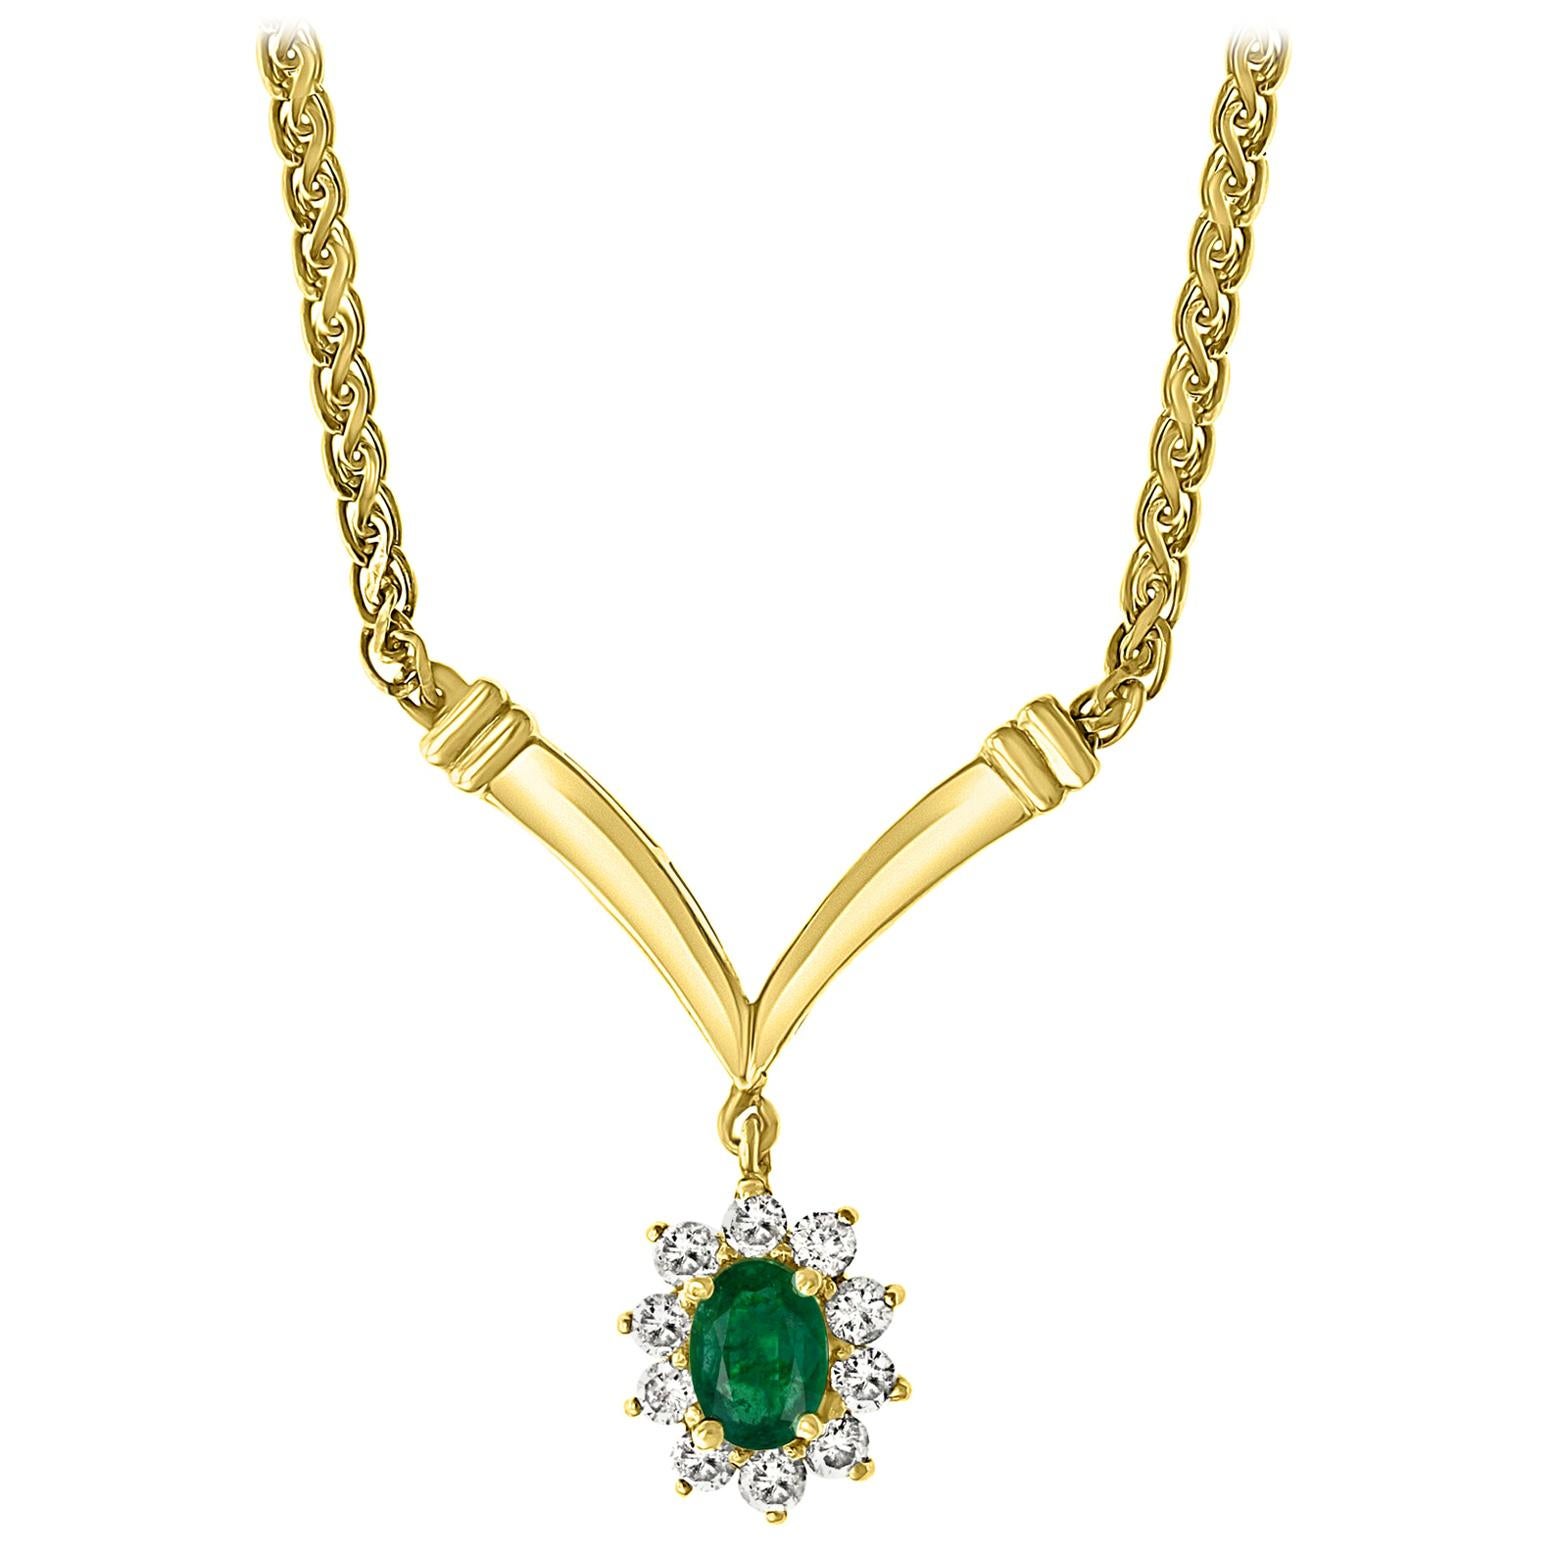 1.2 Carat Oval Shape Emerald & .5 Carat Diamond Necklace in 14 Karat Yellow Gold